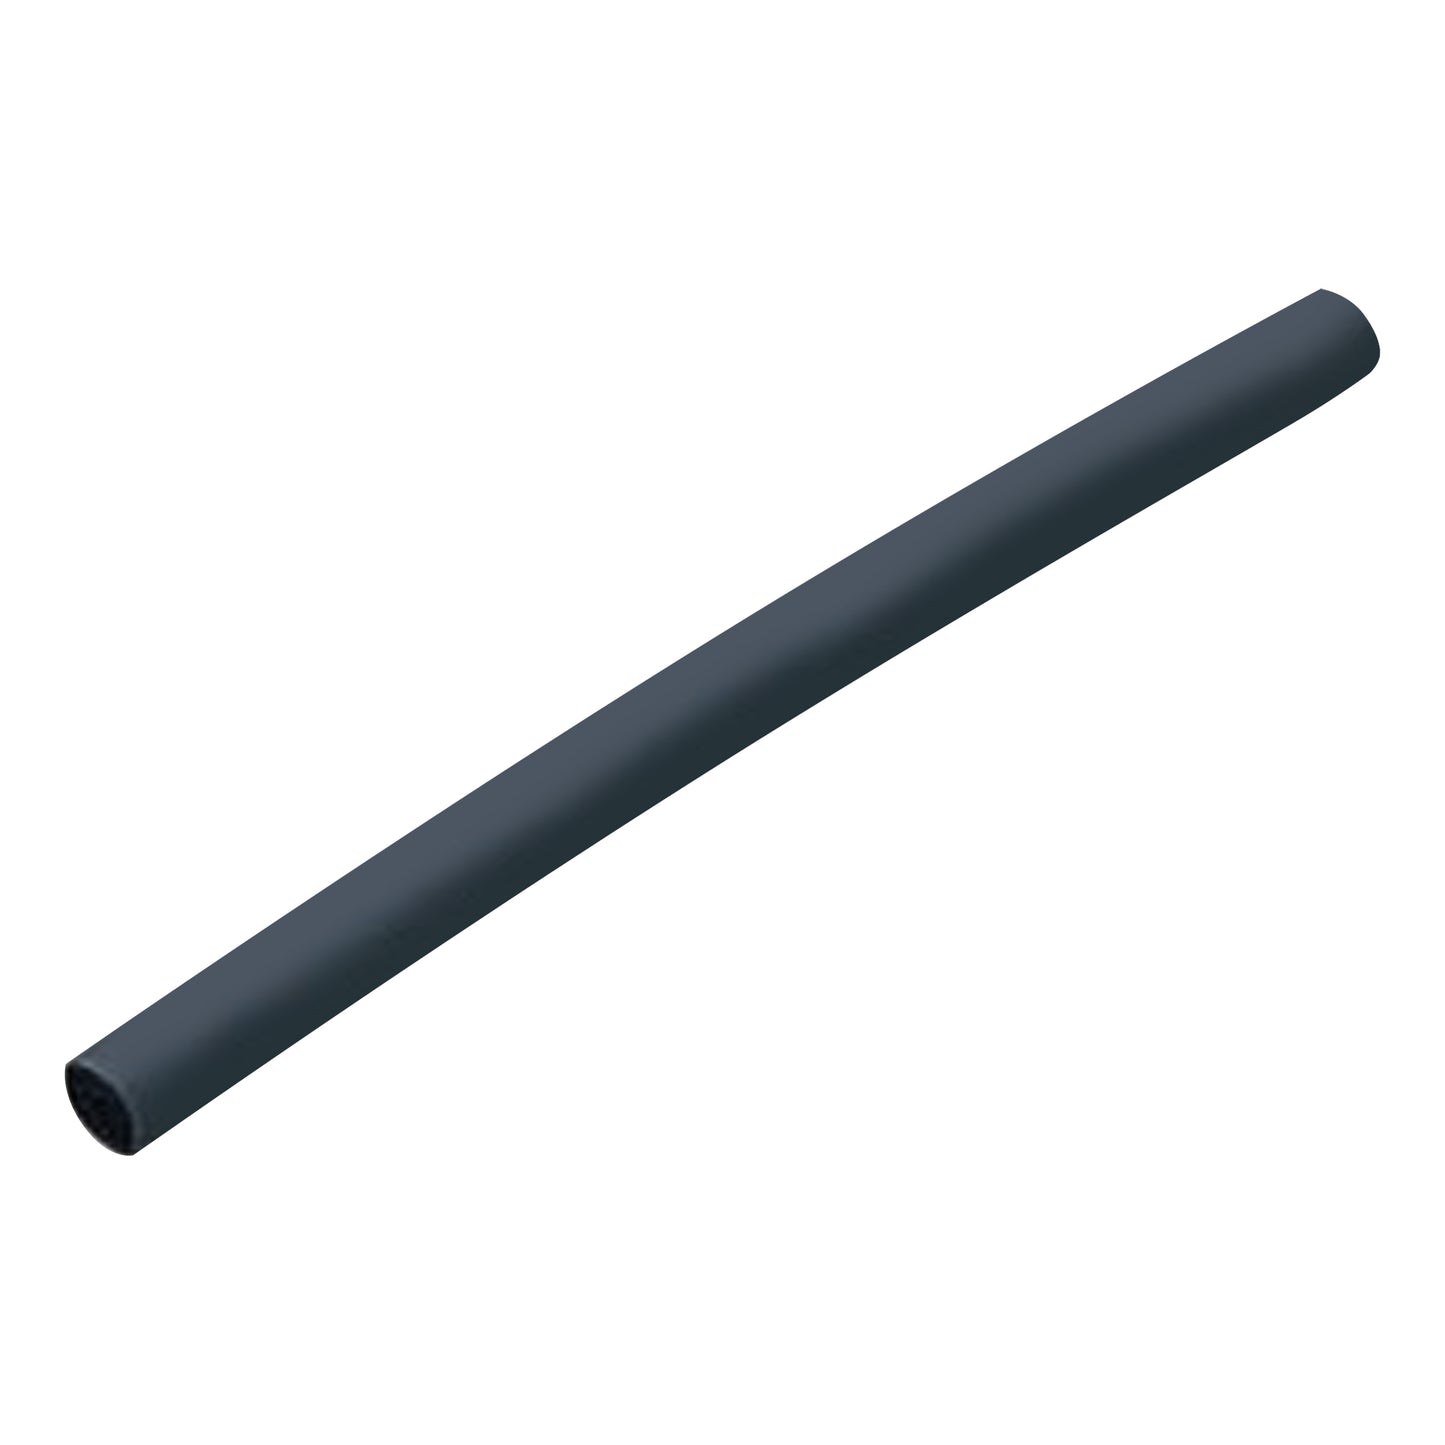 Flexible Thin Single Wall Non-Adhesive Heat Shrink Tubing 2:1 Black 3/64" ID - 48" Inch 4 Pack